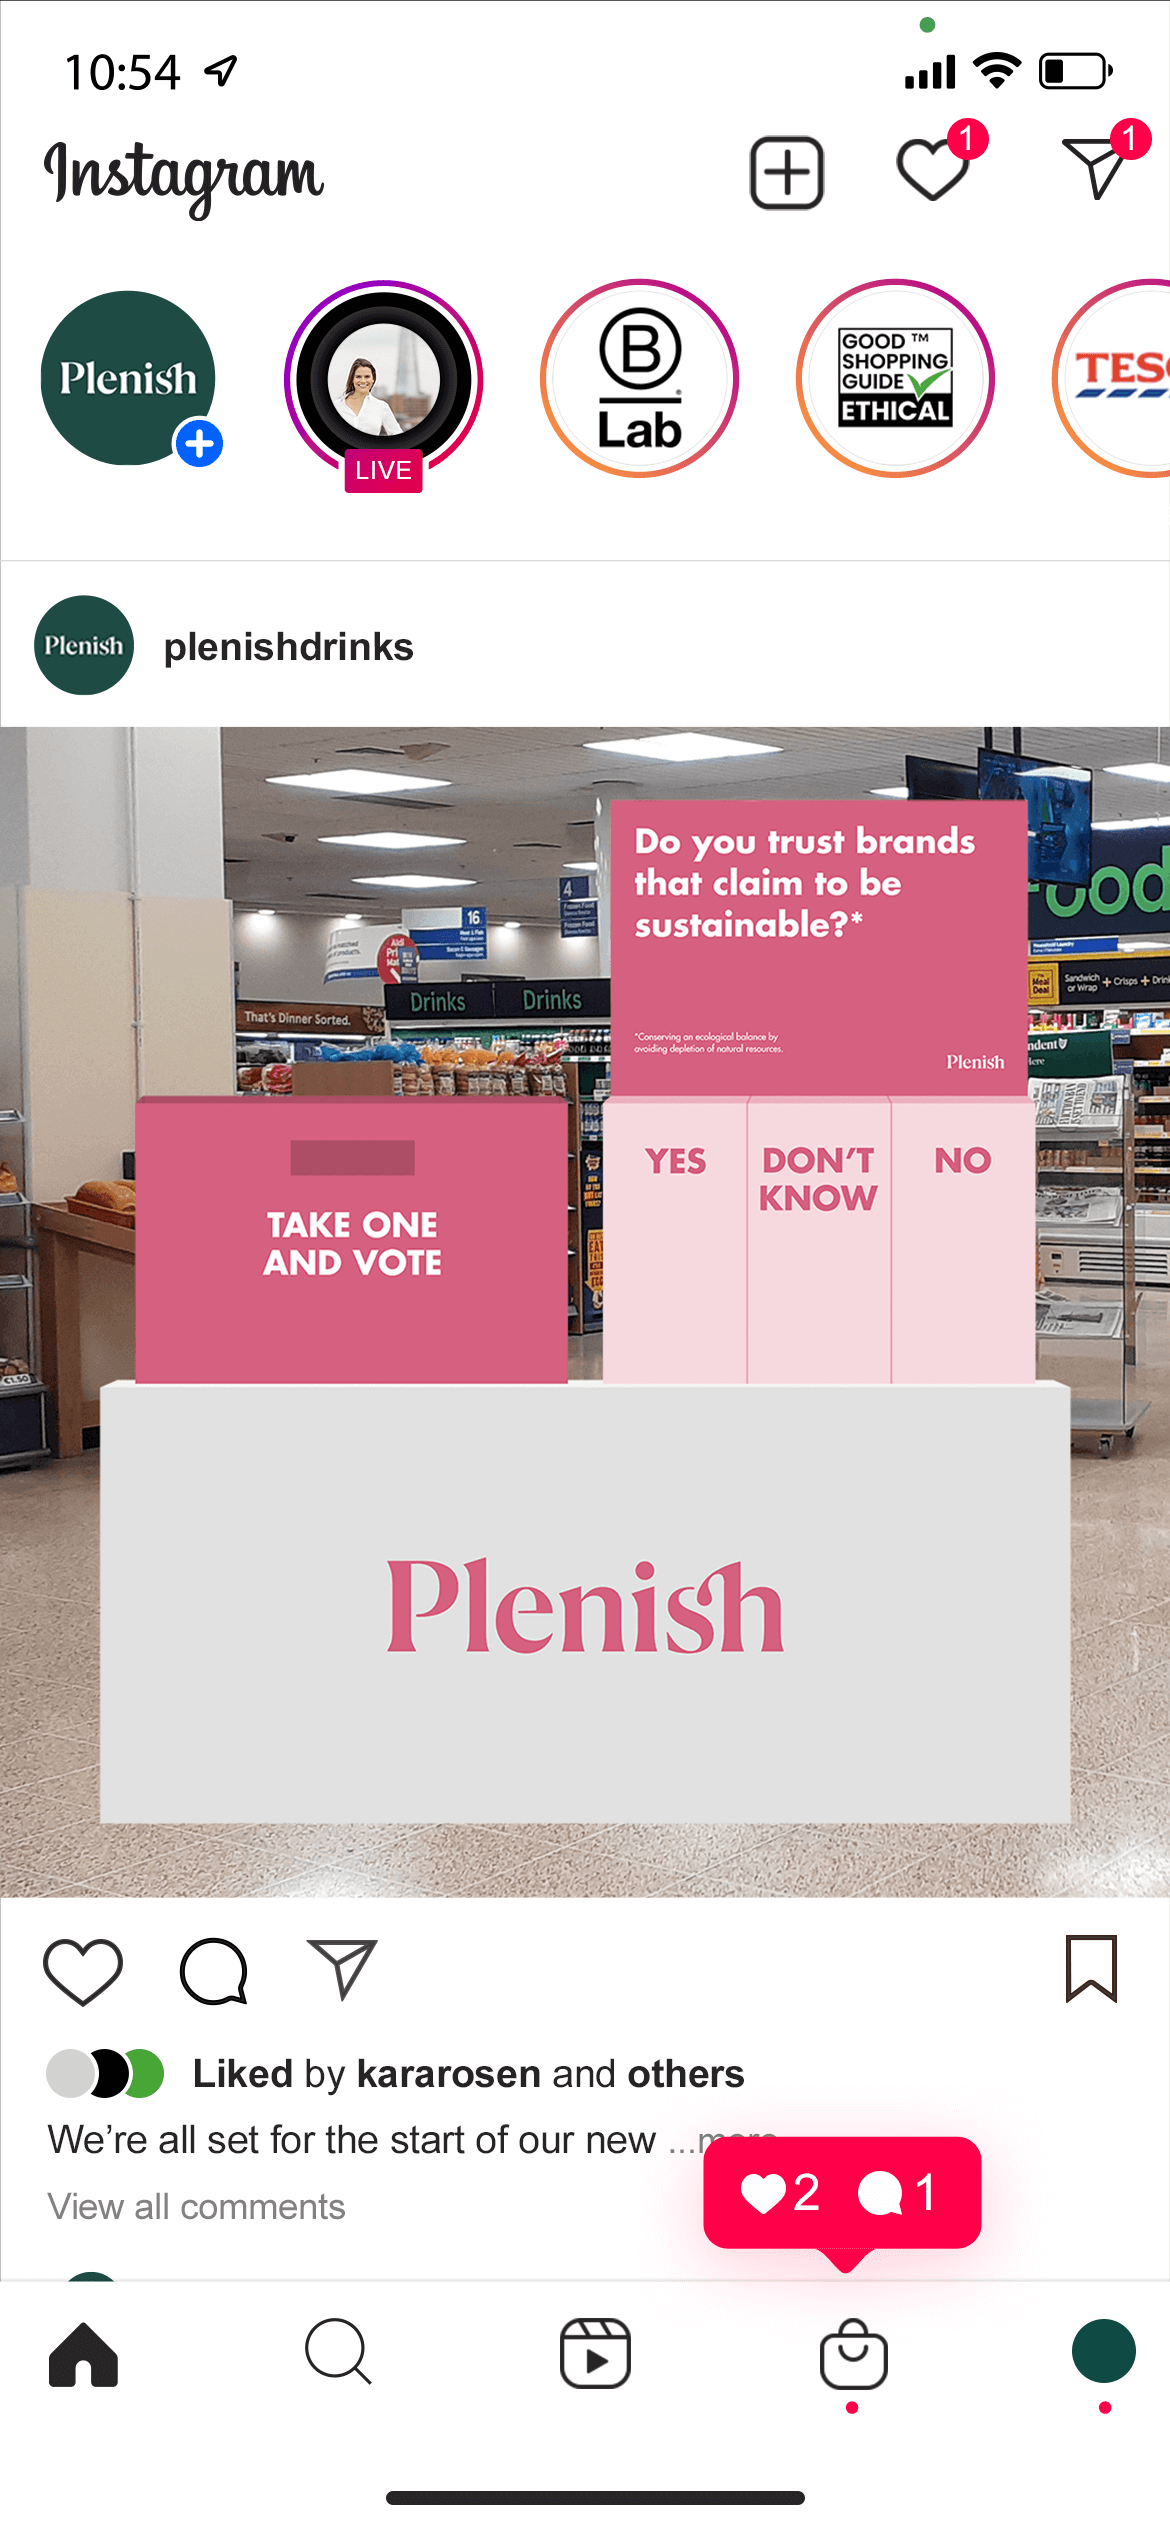 plenish-milks-campaign-instagram-post-1